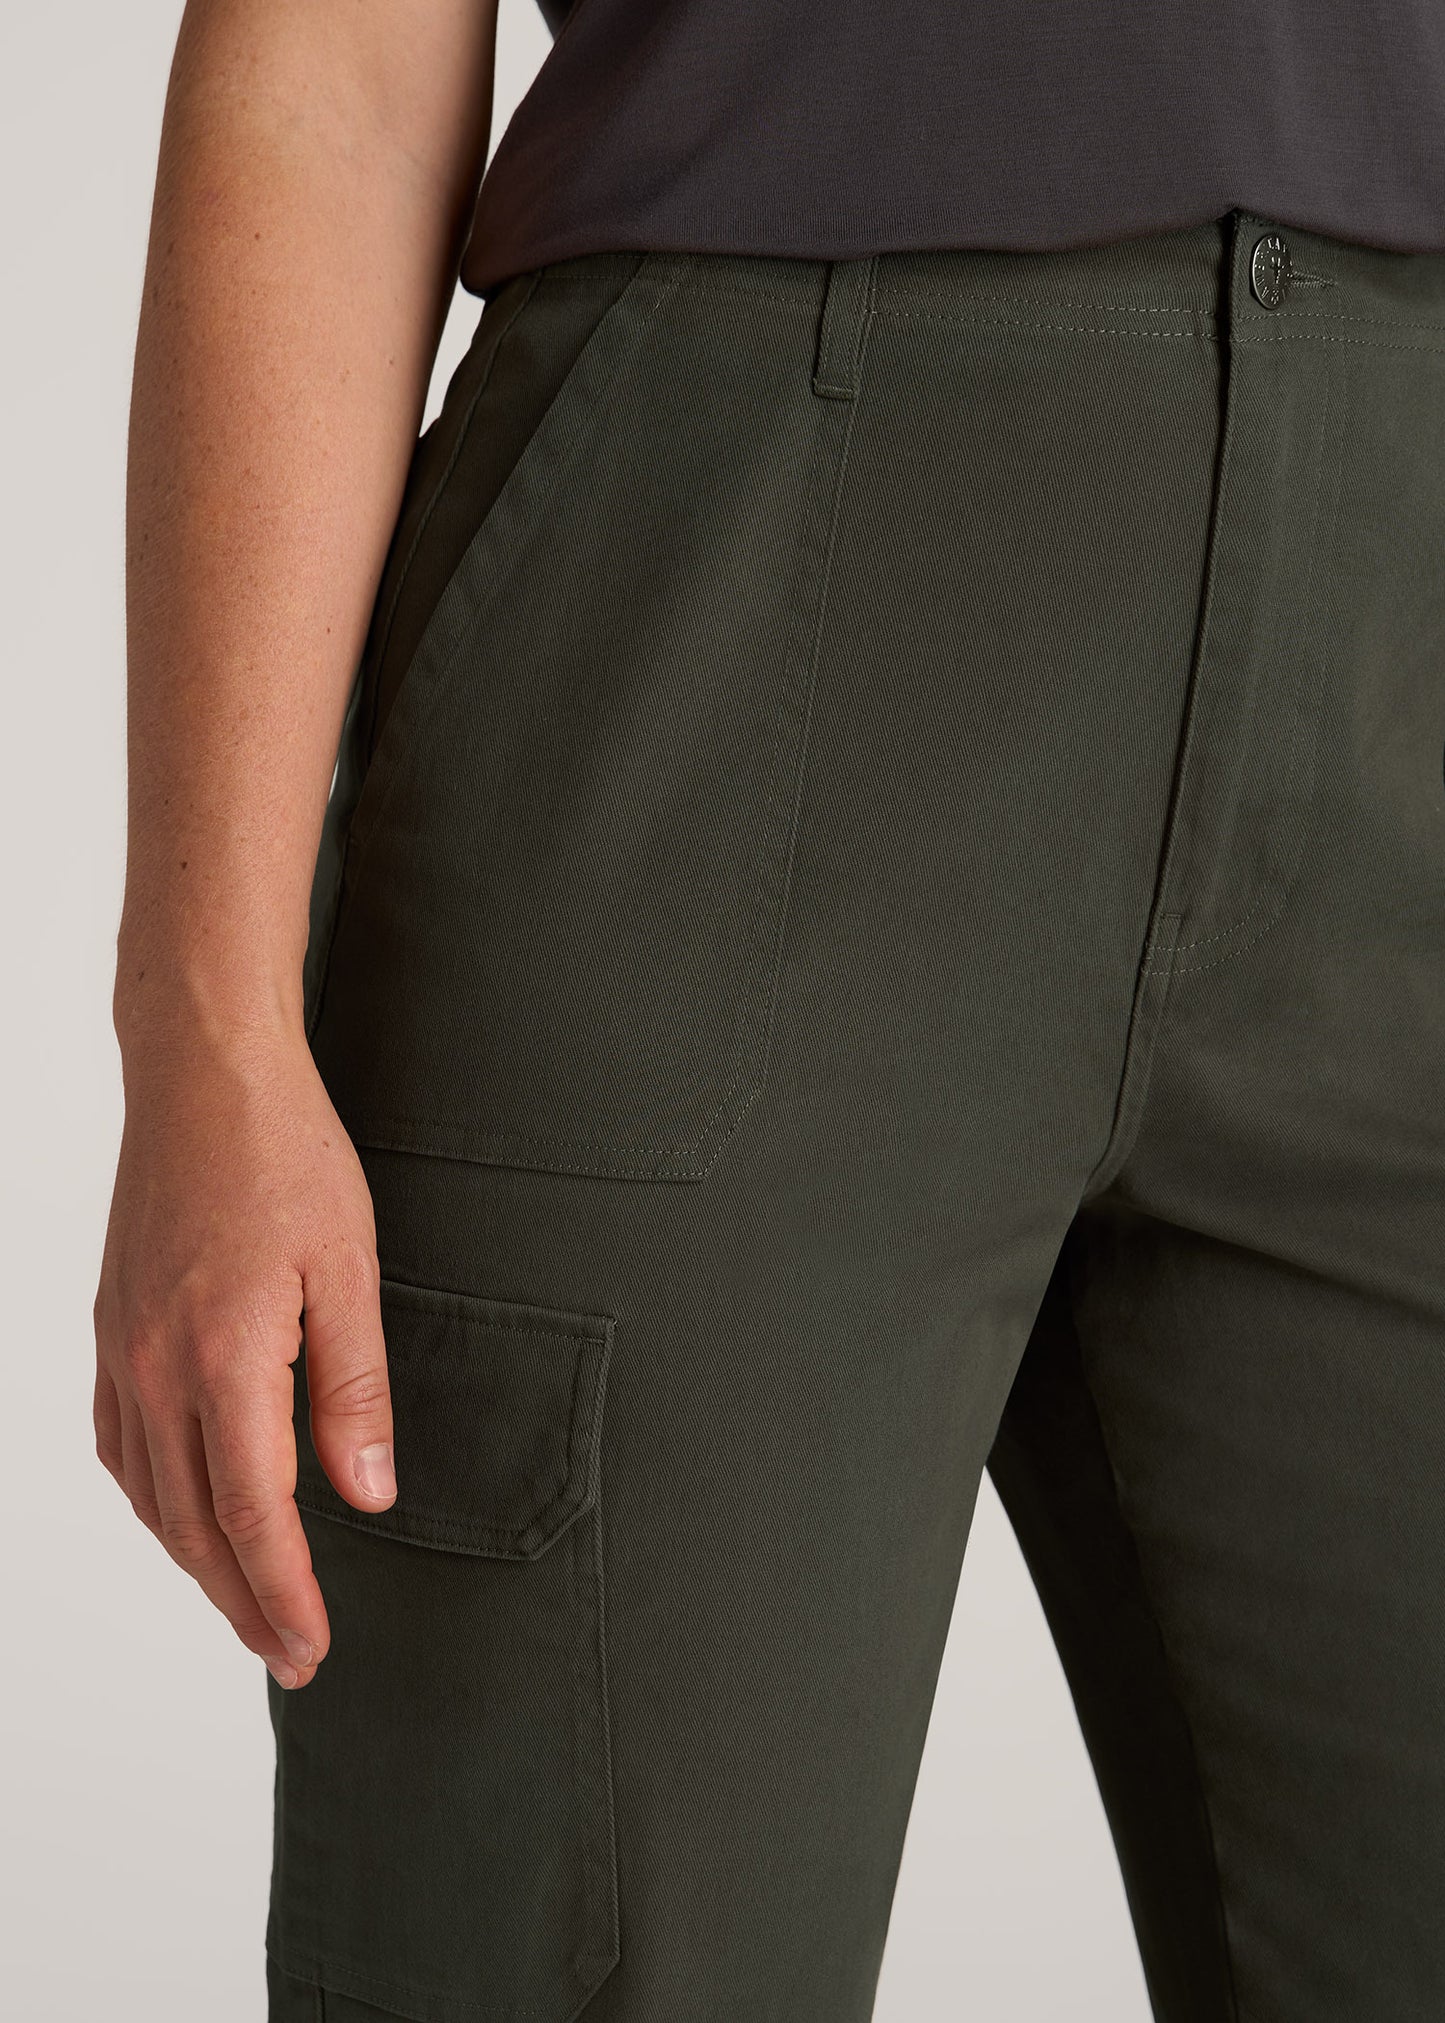 Straight Leg Cargo Chino Pants for Tall Women in Dark Moss Green